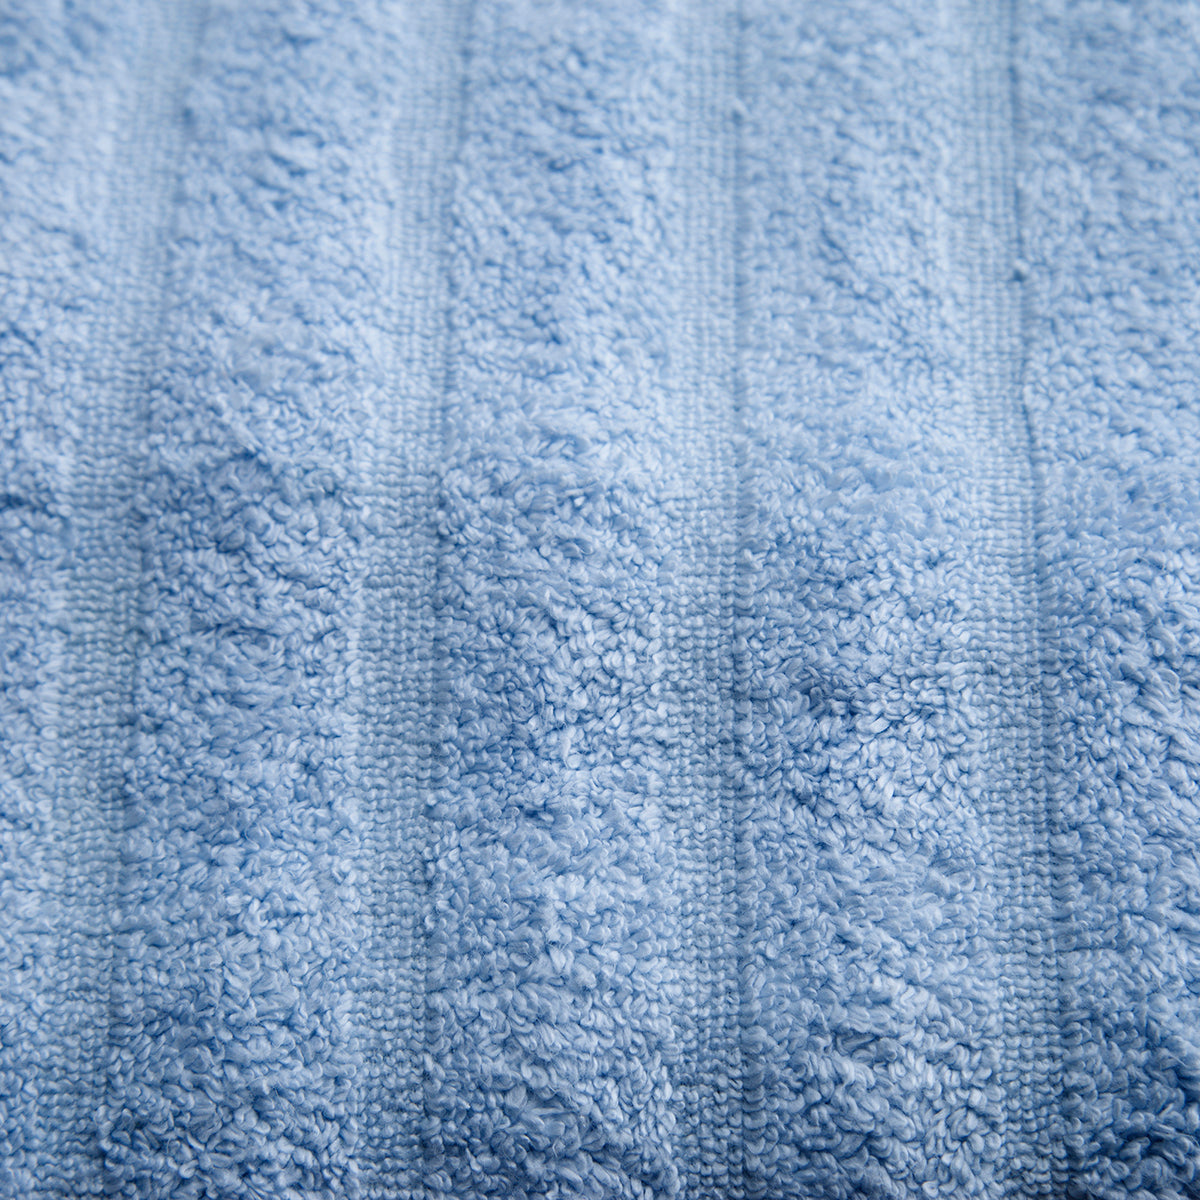 Casper Antimicrobial Antifungal Super Absorbent Lofty Baby Blue Towel